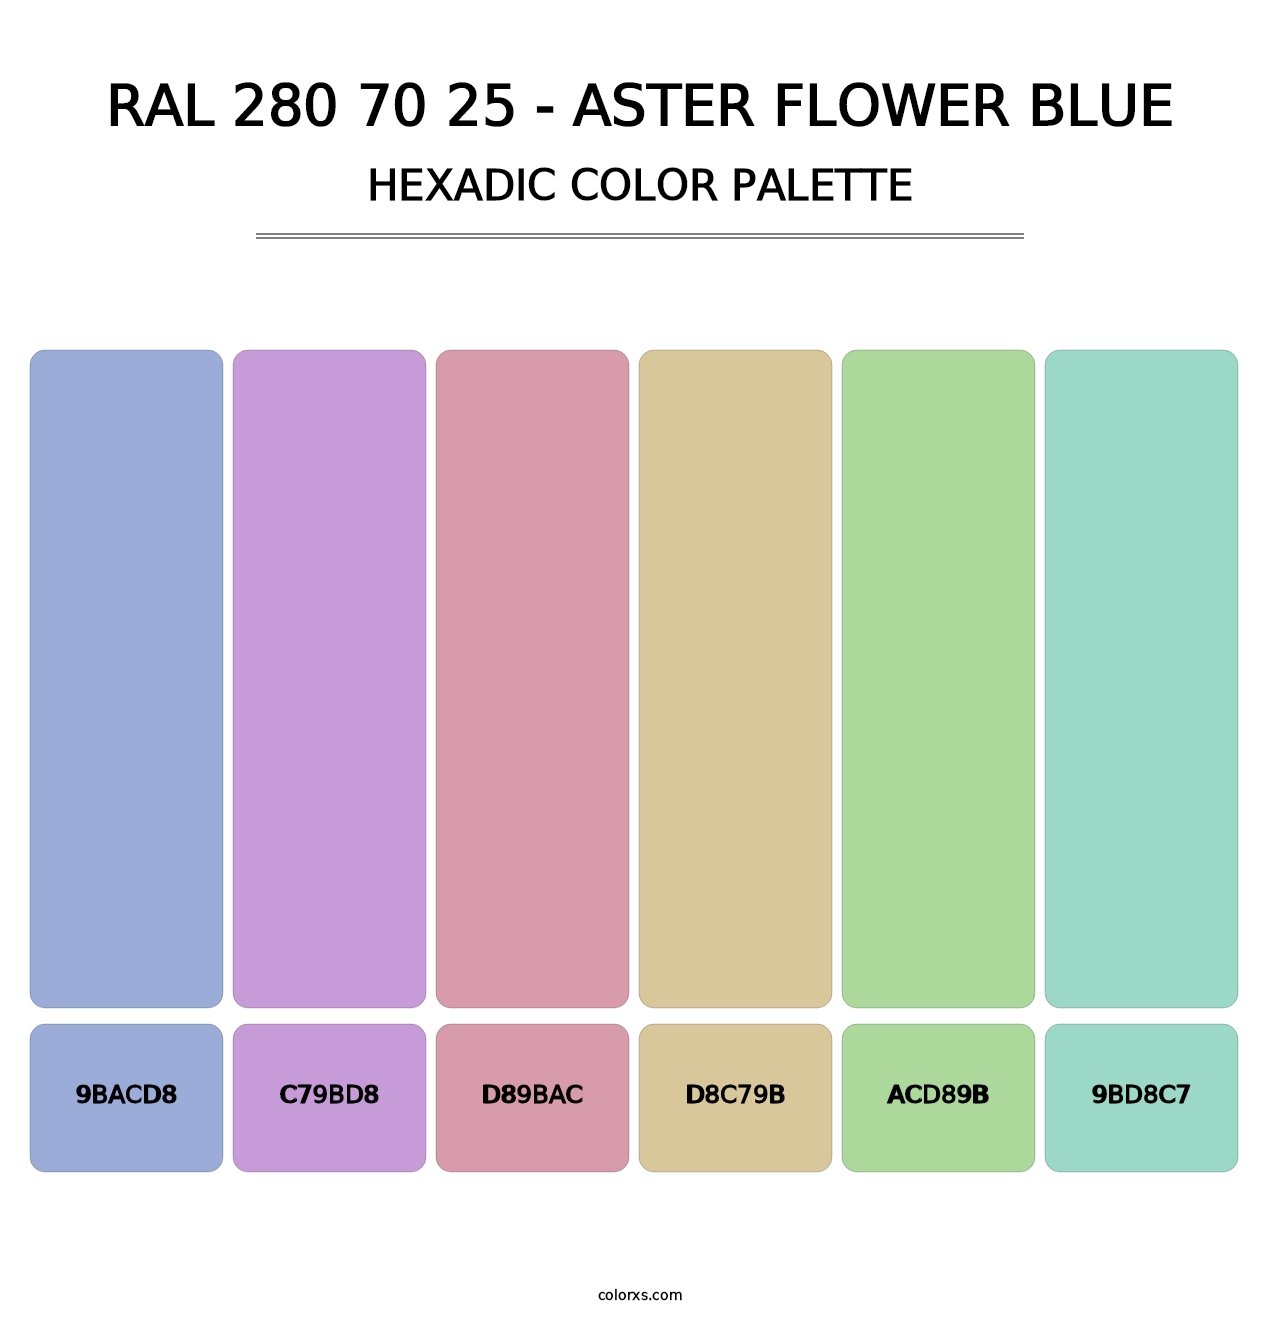 RAL 280 70 25 - Aster Flower Blue - Hexadic Color Palette